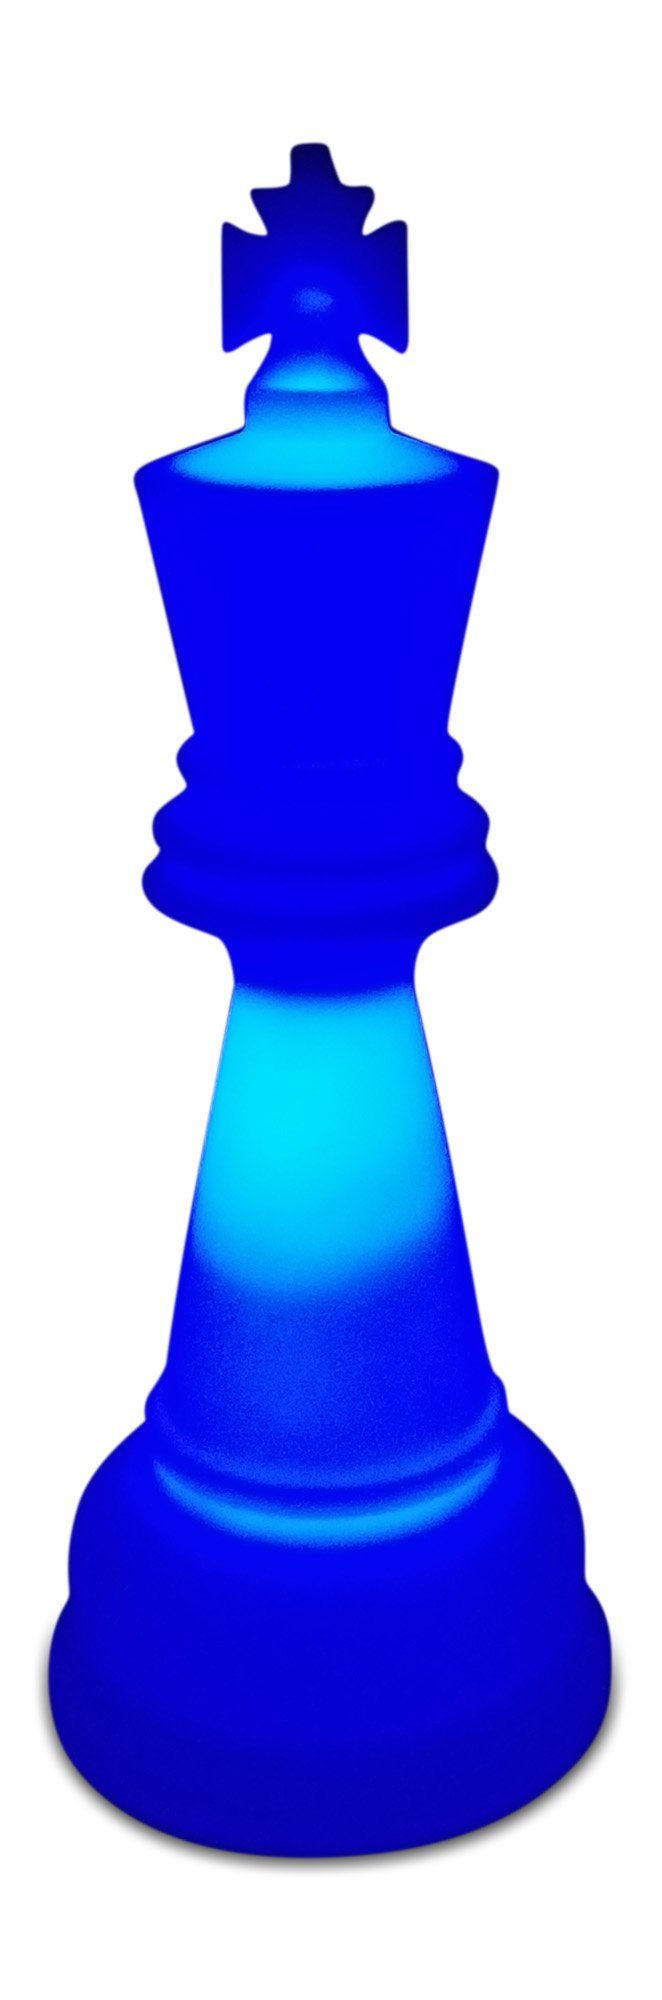 MegaChess 26 Inch Perfect King Light-Up Giant Chess Piece - Blue |  | MegaChess.com